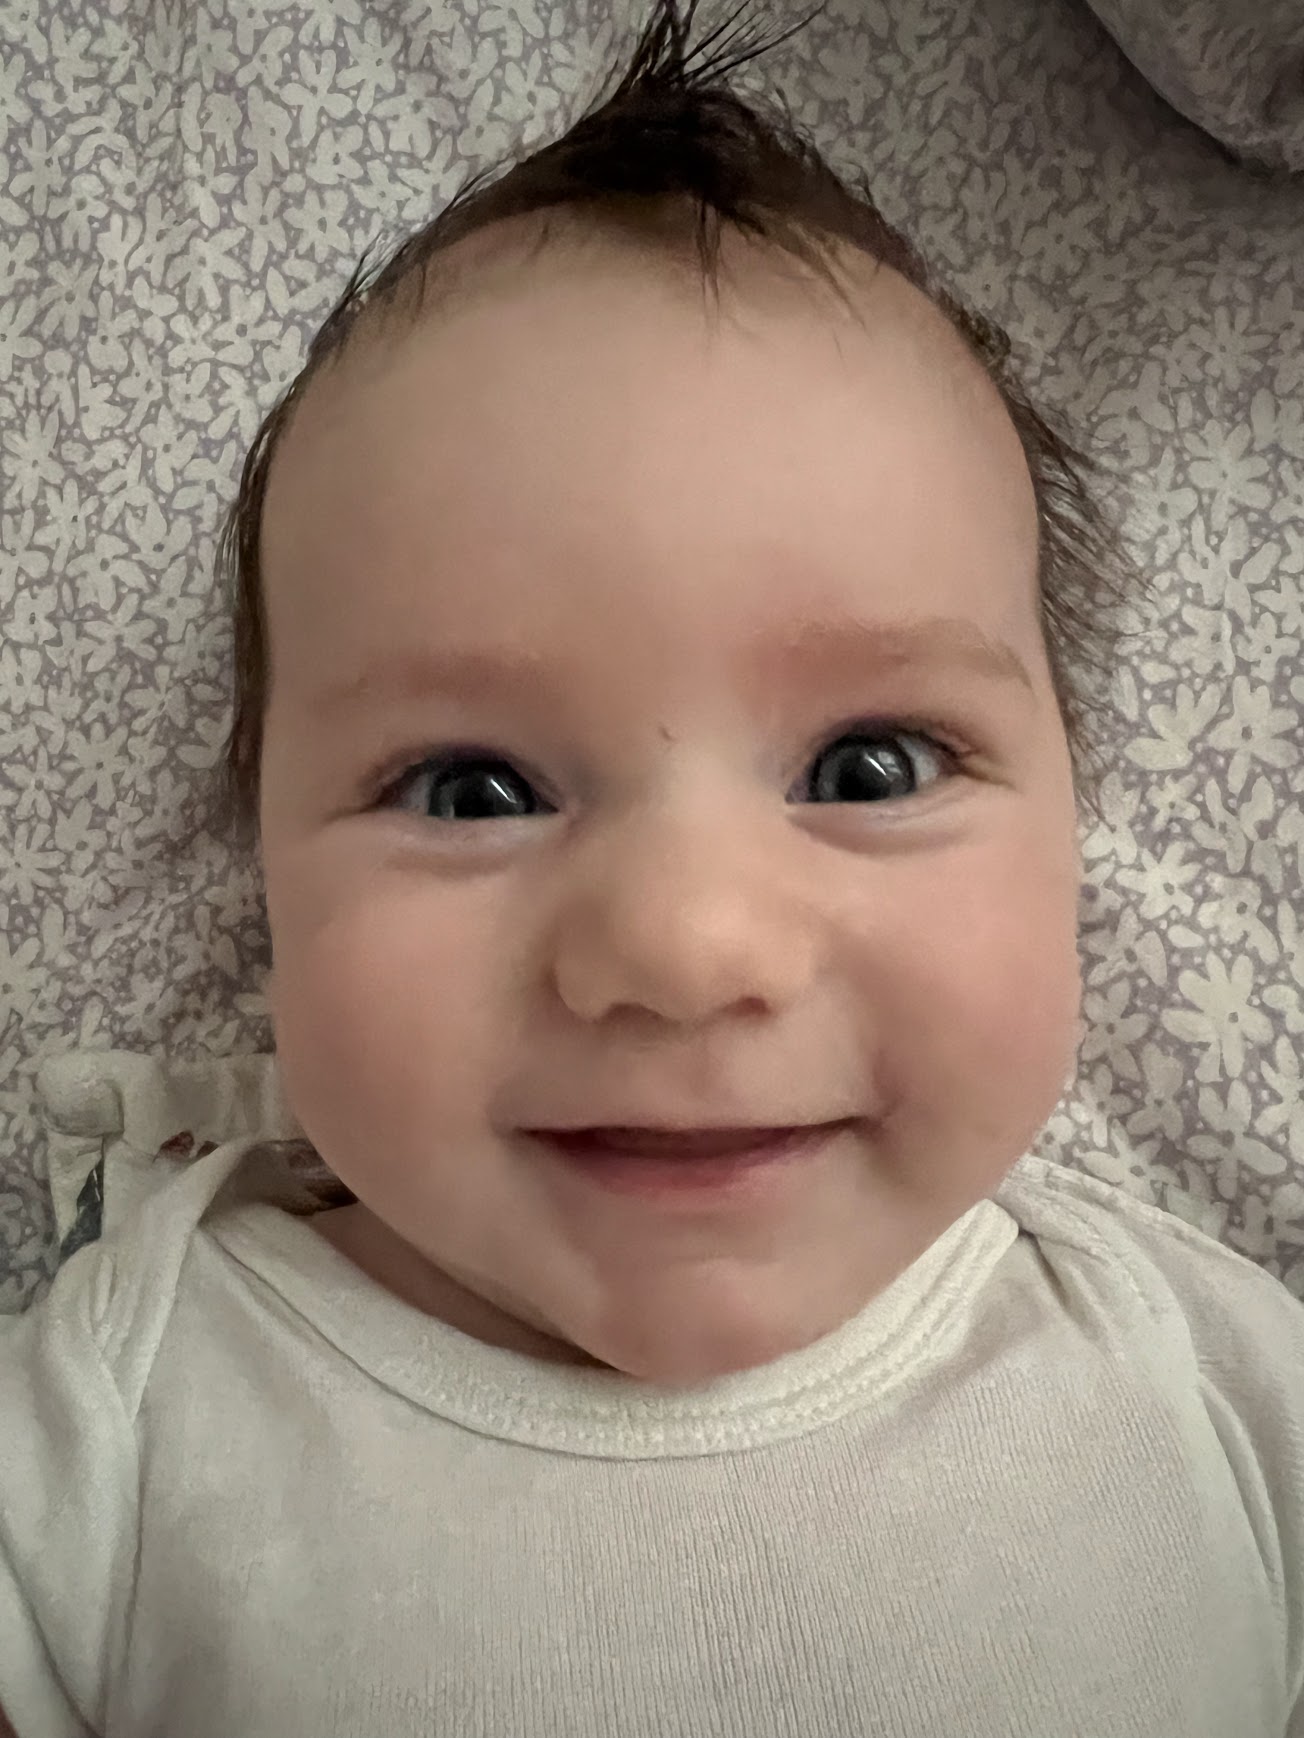 a baby smiling at the camera